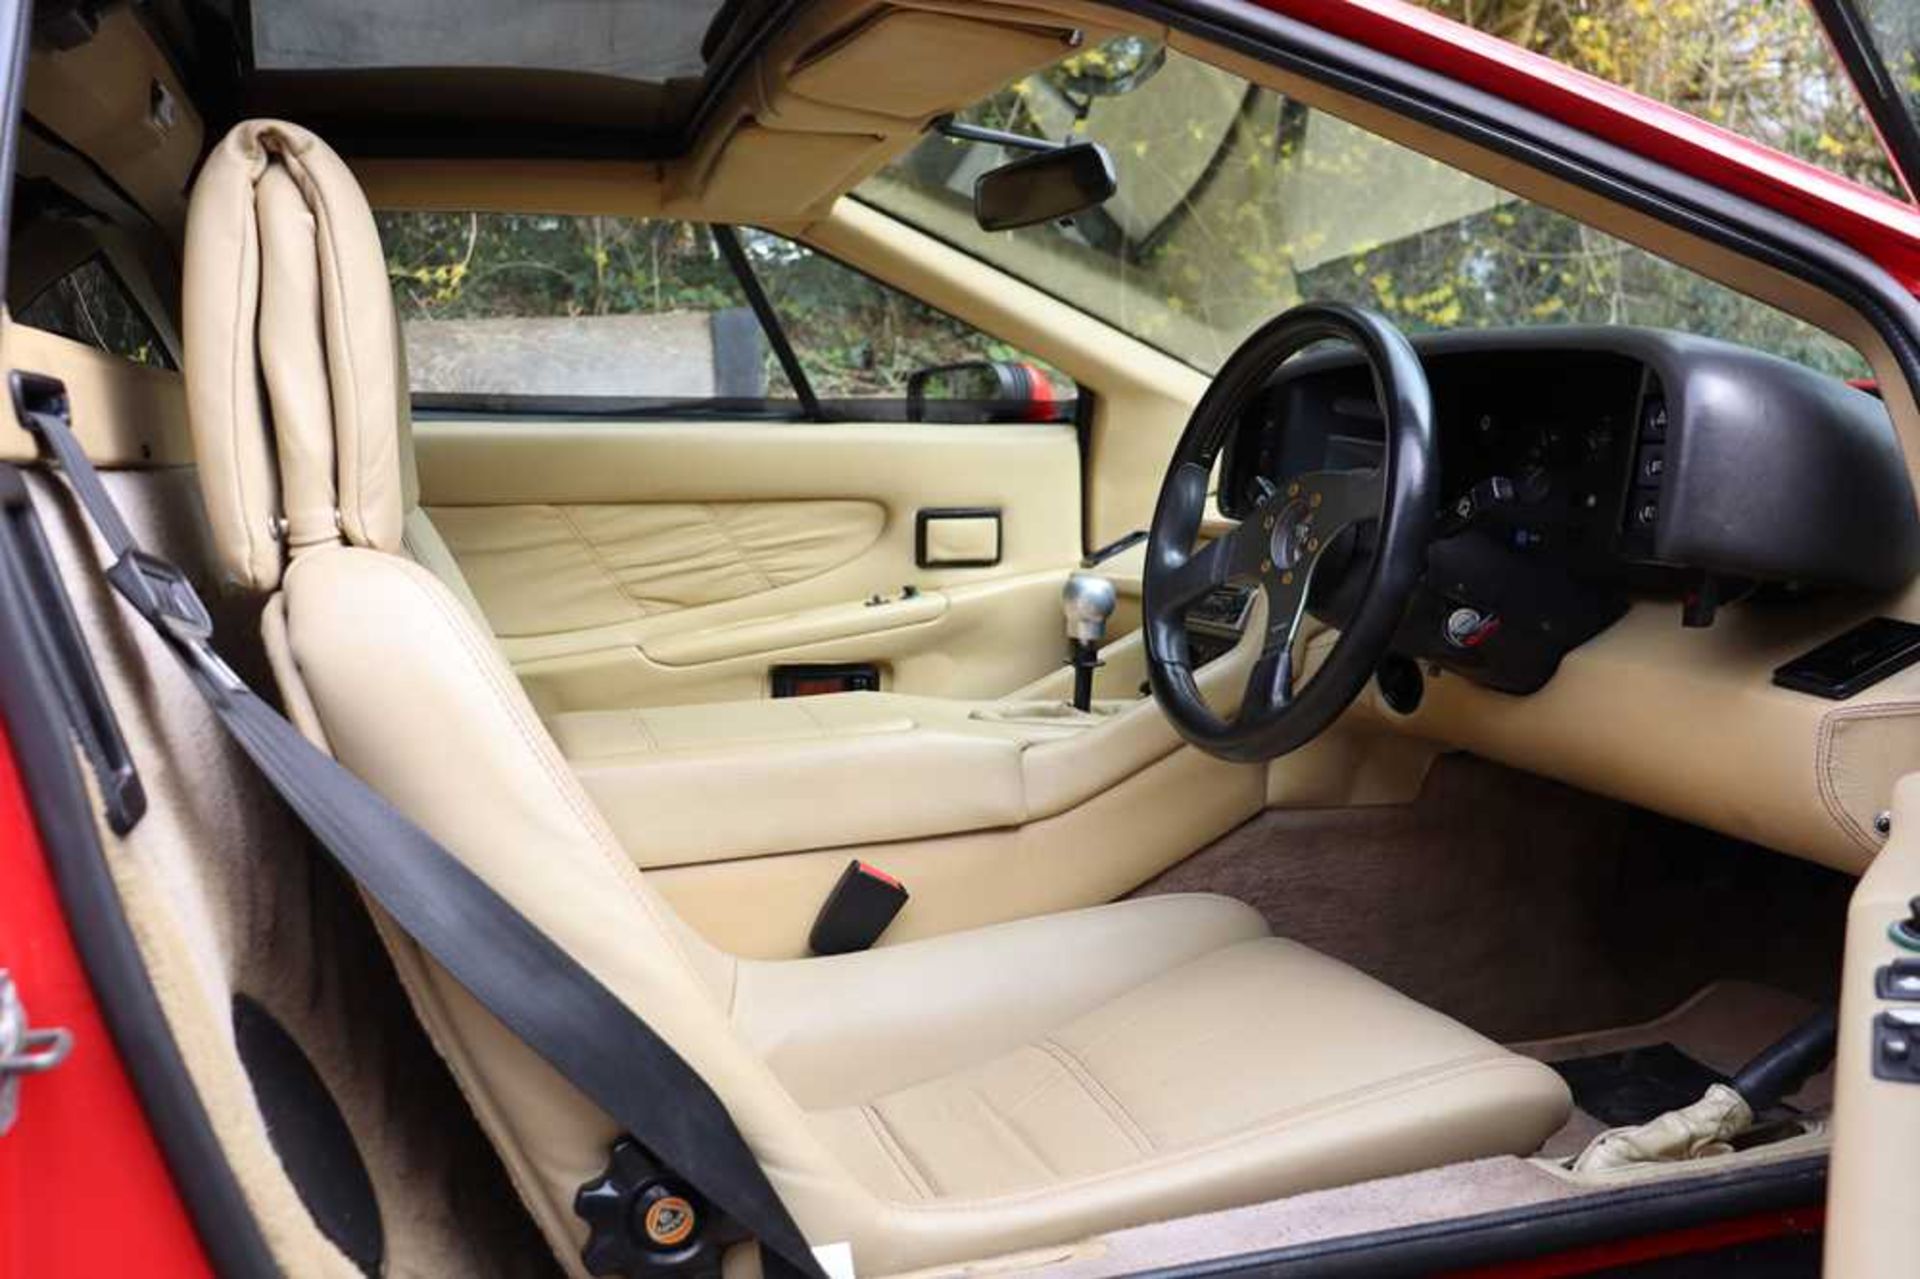 1989 Lotus Esprit Turbo Just 37,000 recorded miles - Image 41 of 72